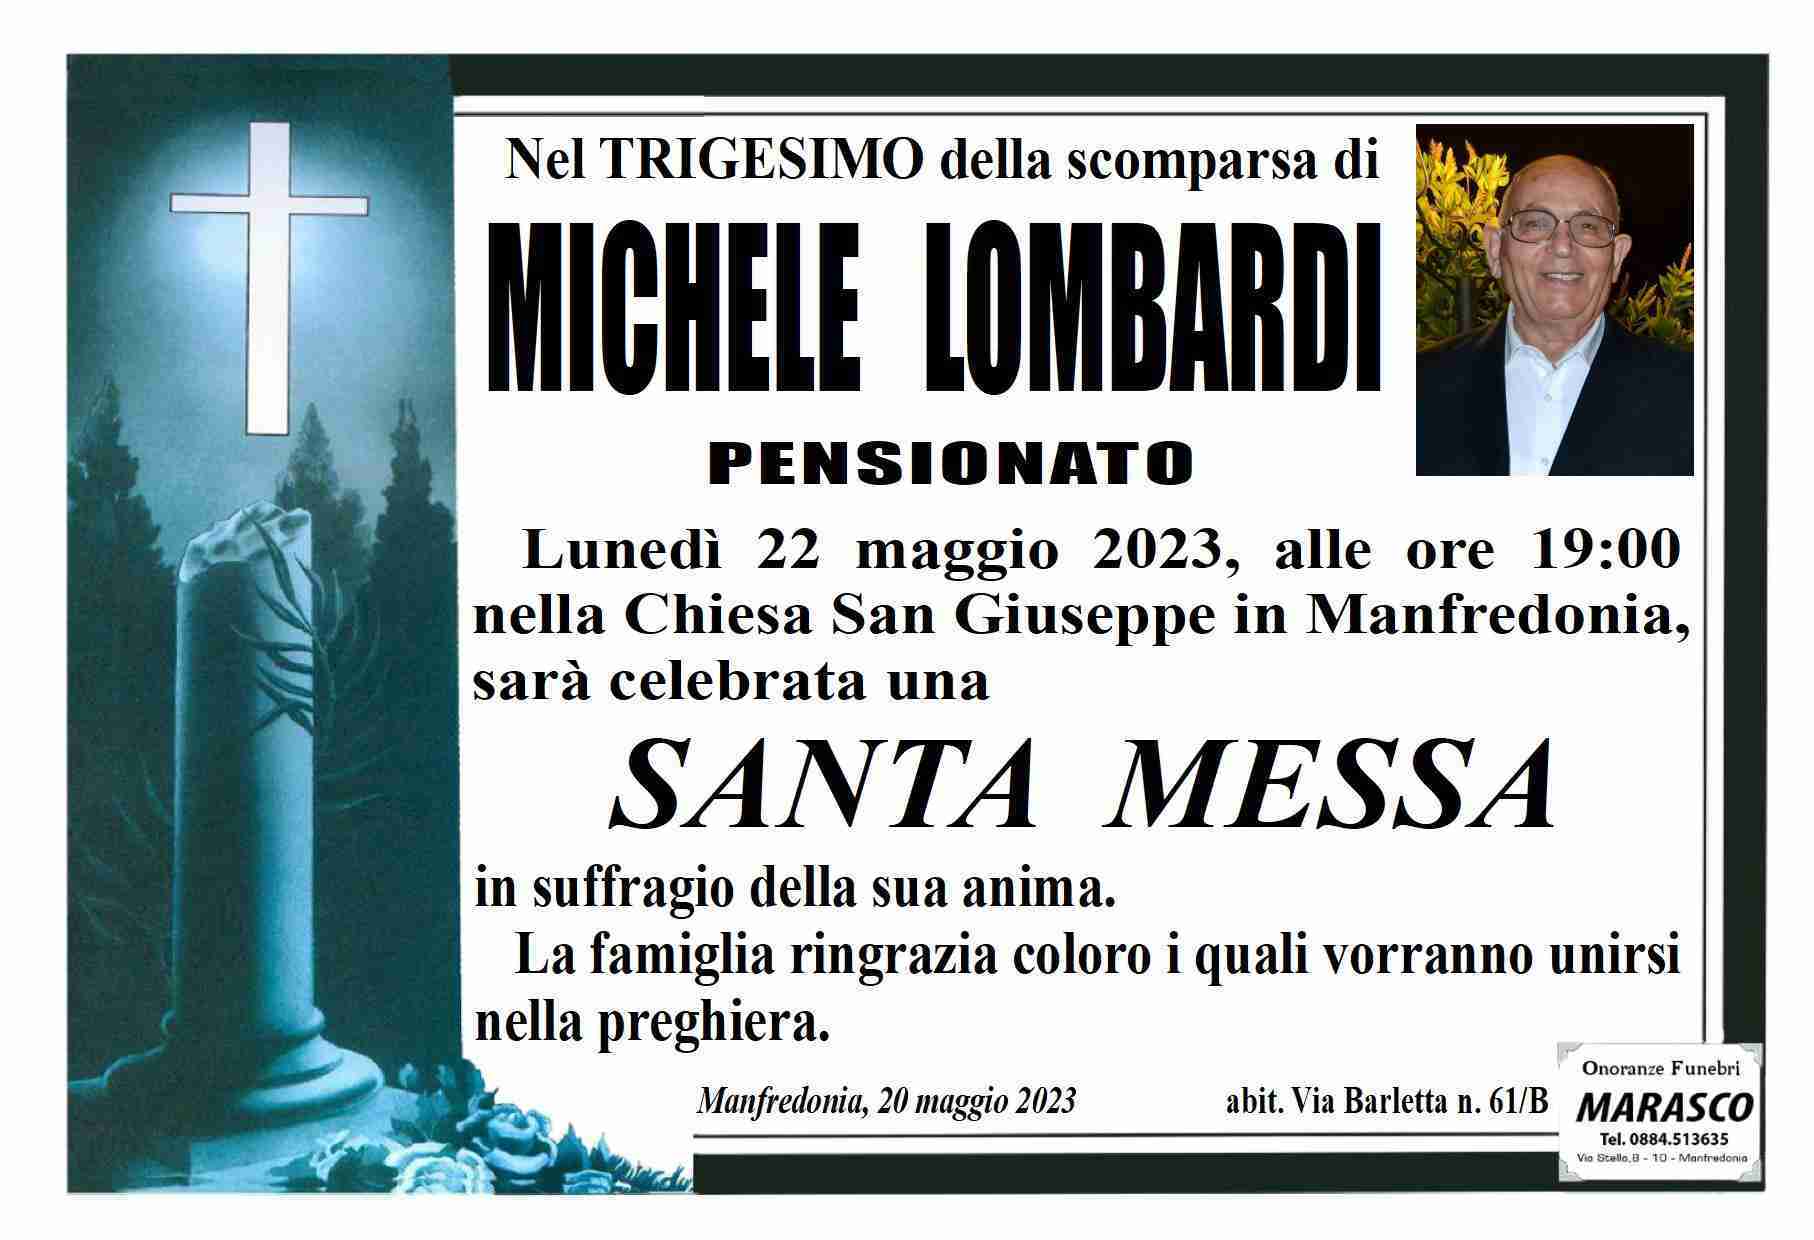 Michele Lombardi